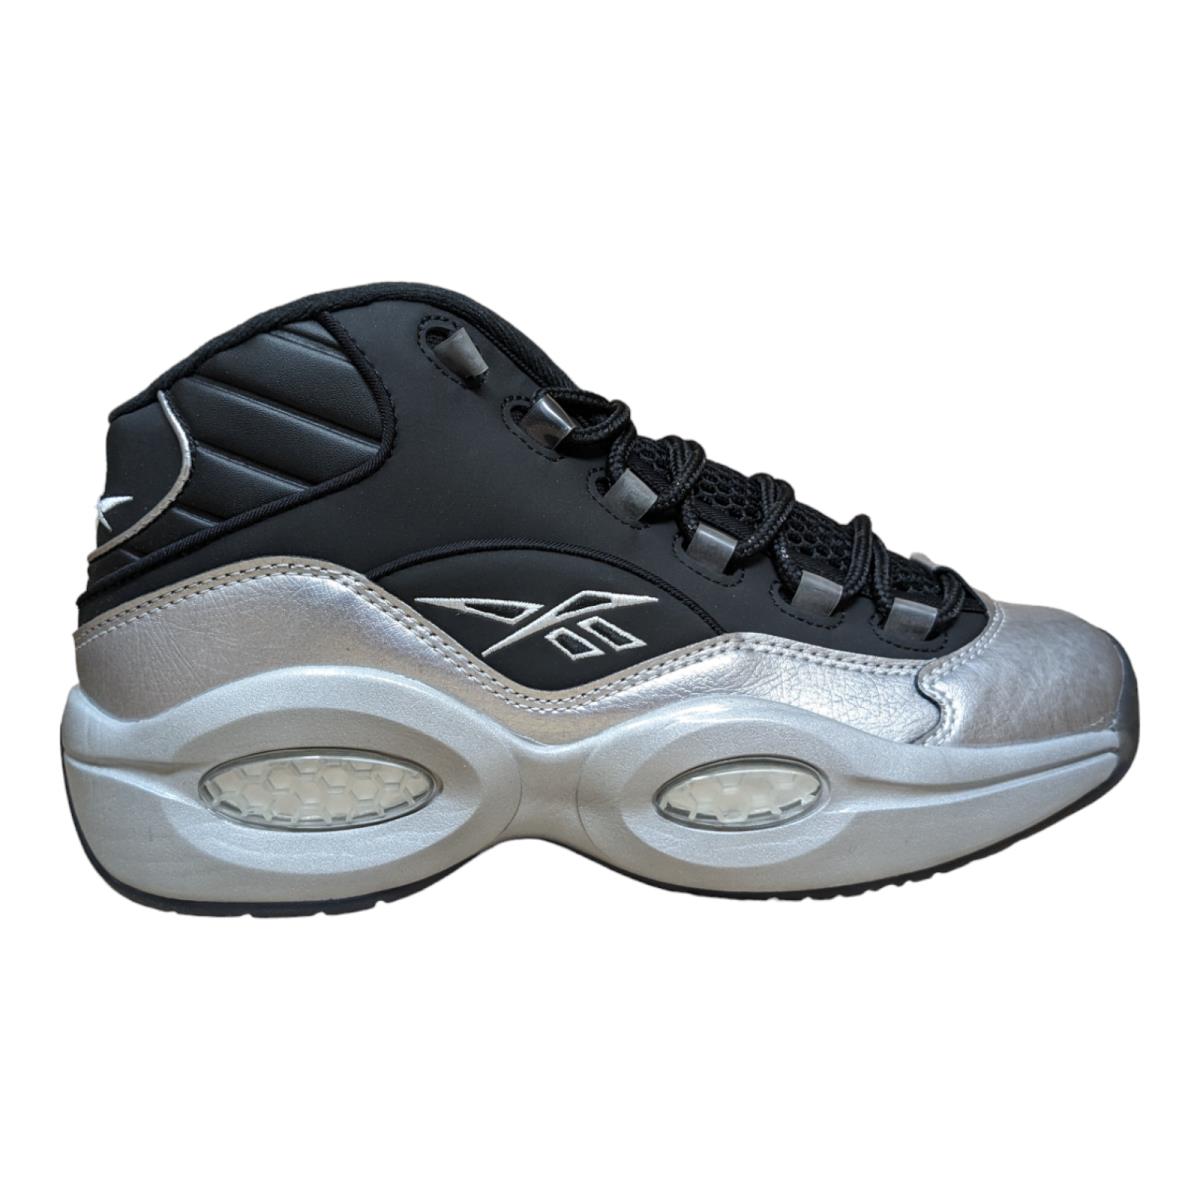 Reebok Men`s Question Mid Basketball Shoe - US Shoe Size 8.5 Black - GX7925